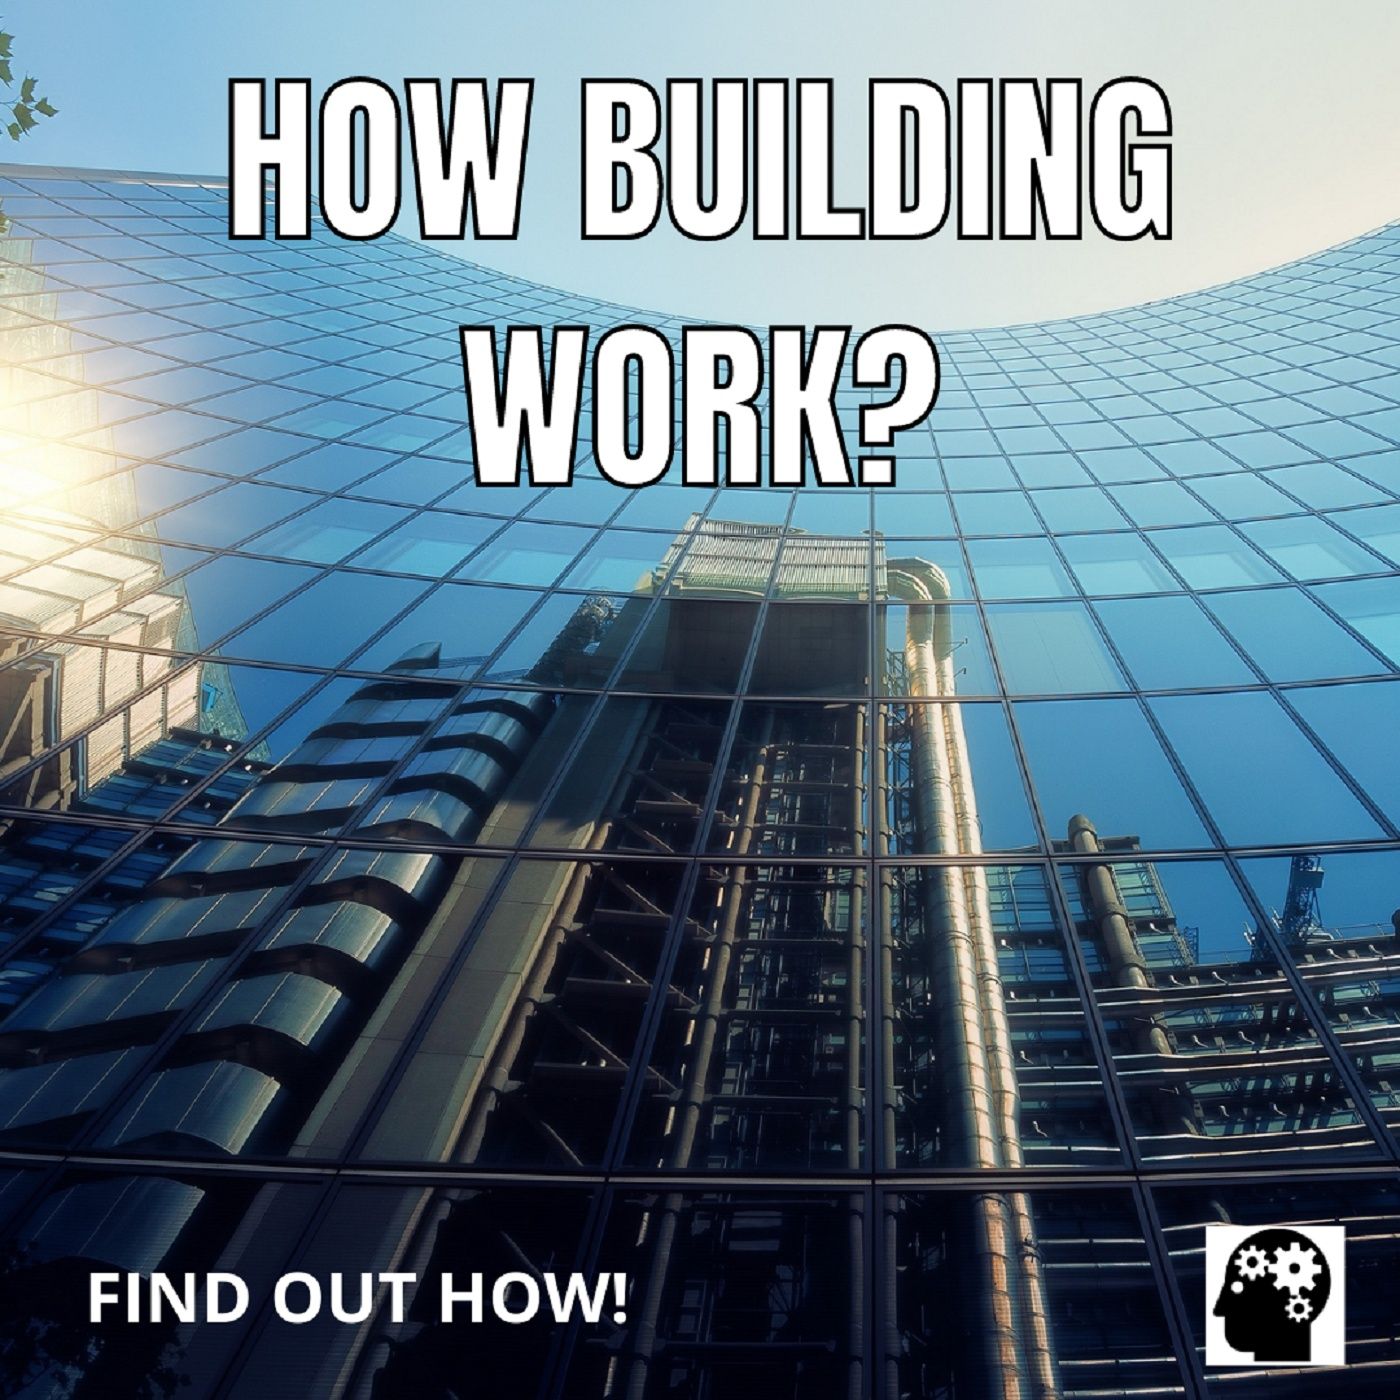 How Building Work?